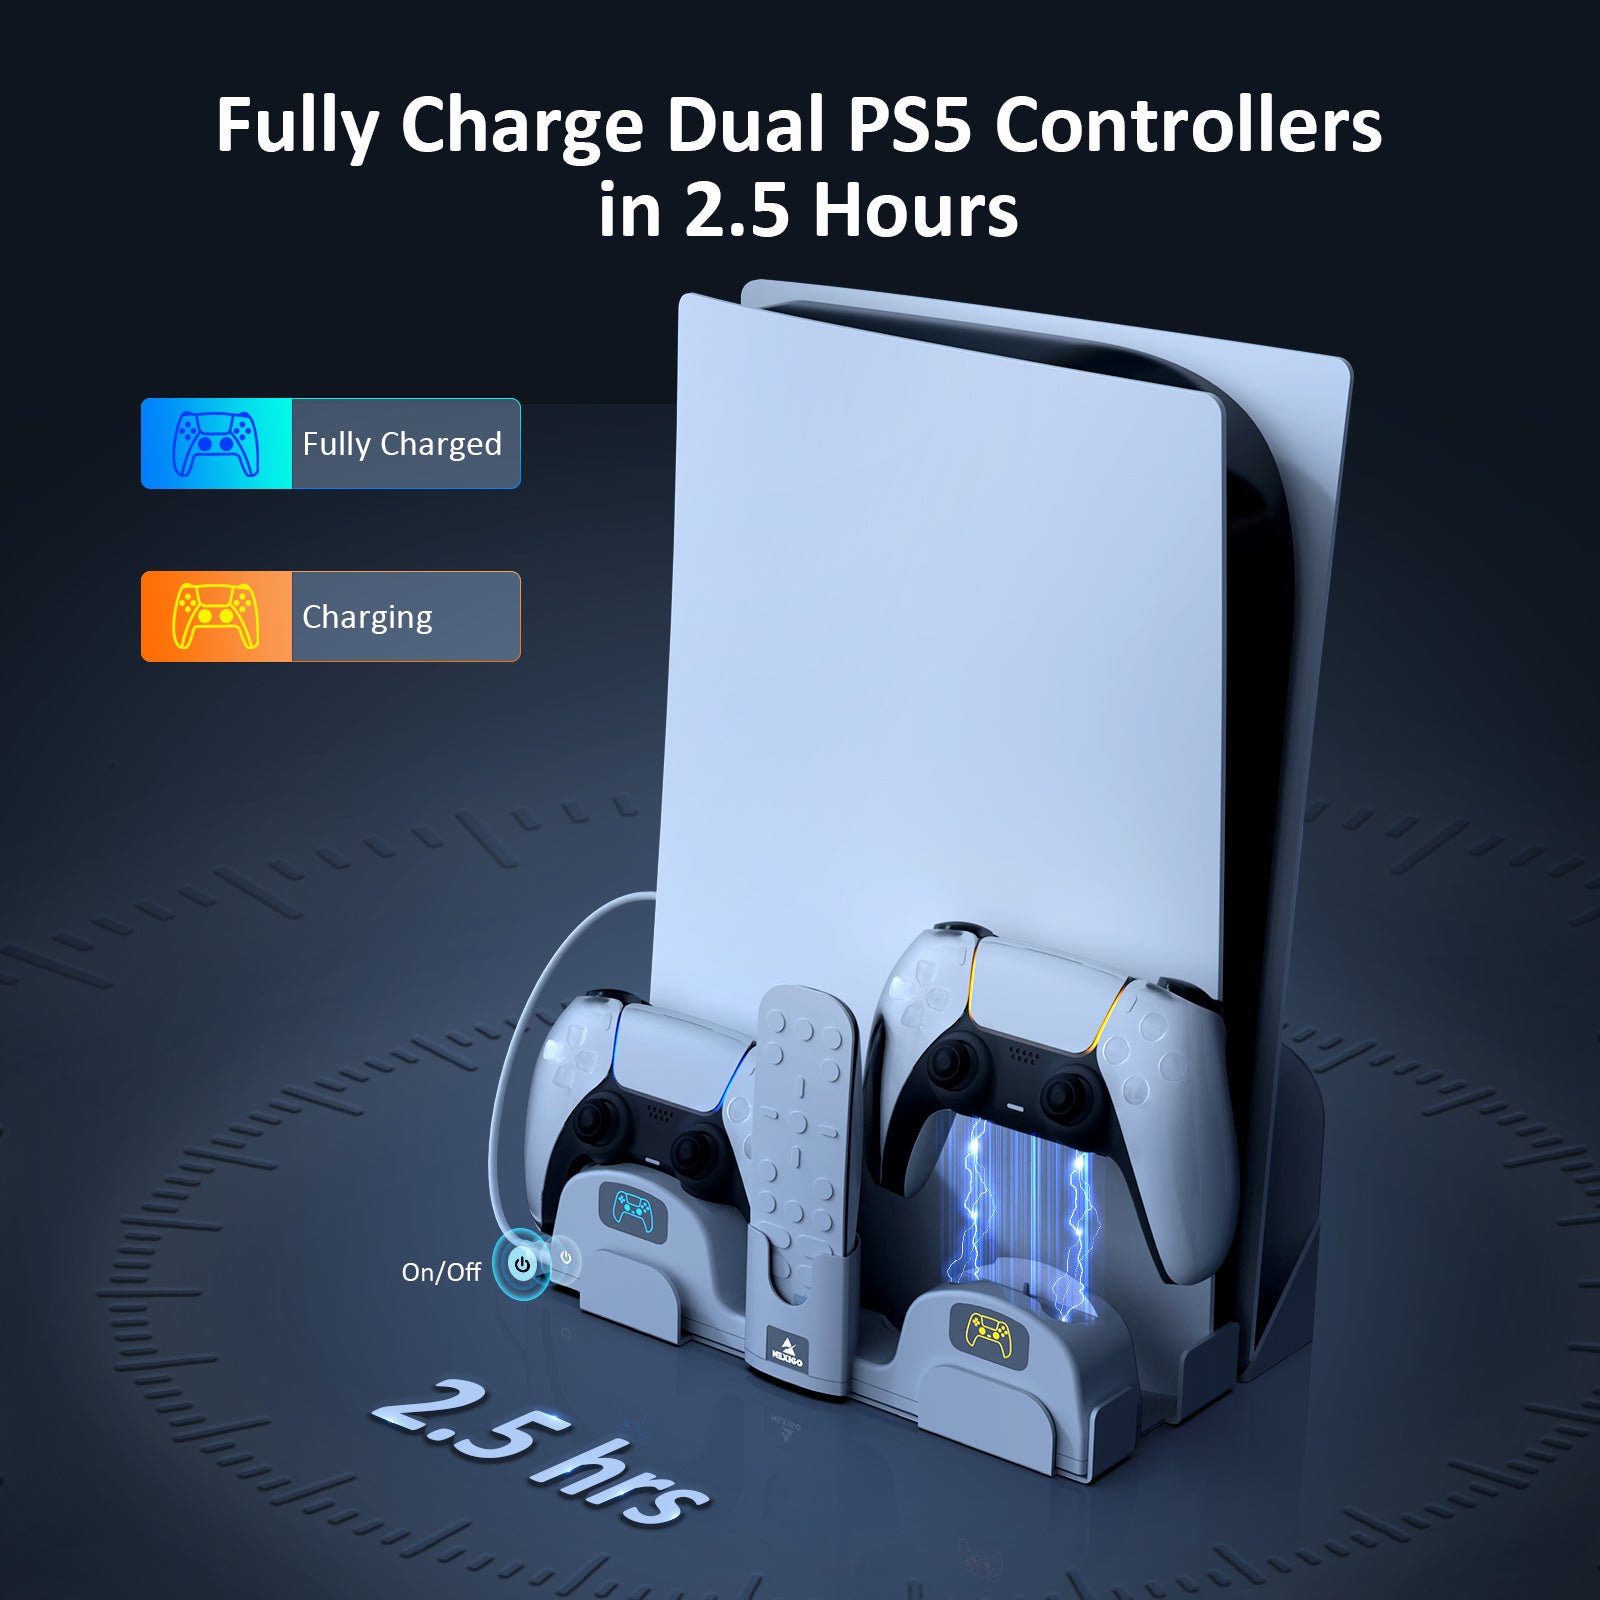 NexiGo PS5 (All Versions) and PSVR2 Wall Mount Kit with Charging Station consumerelectronics - NexiGo